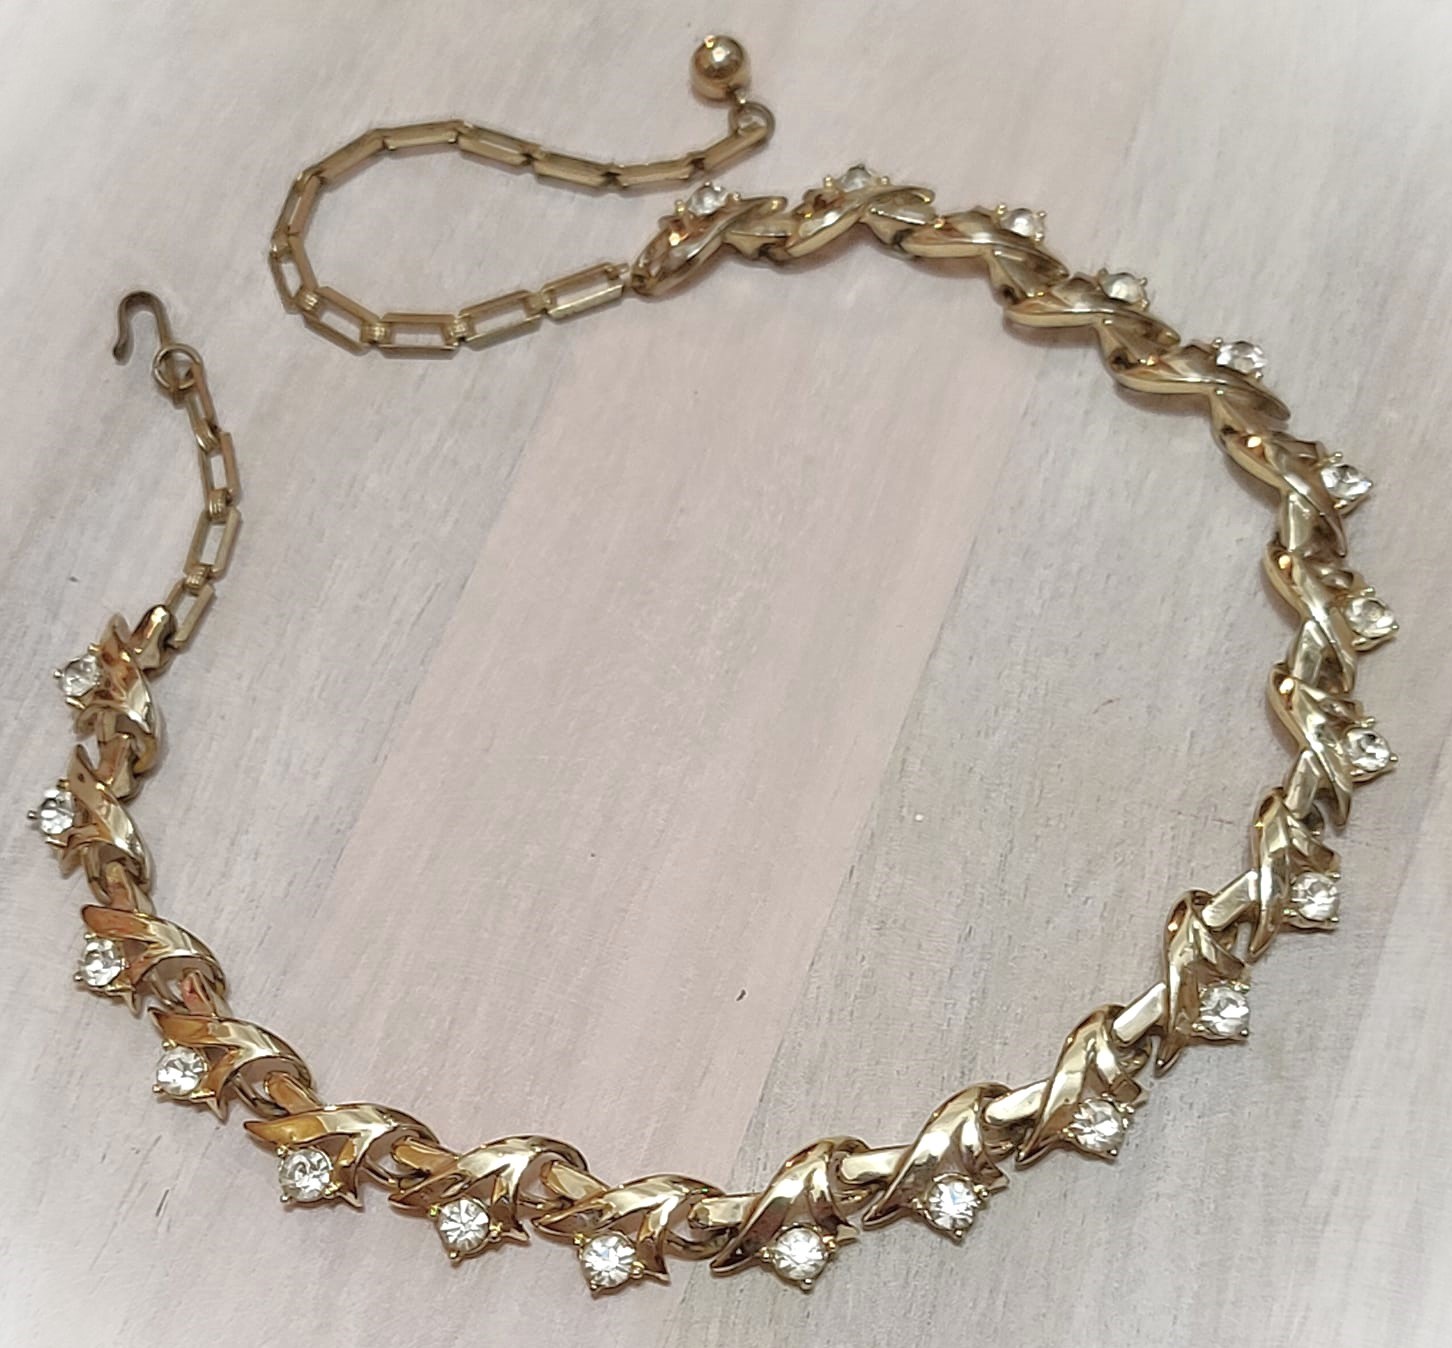 Goldtone and rhinestone vintage choker necklace